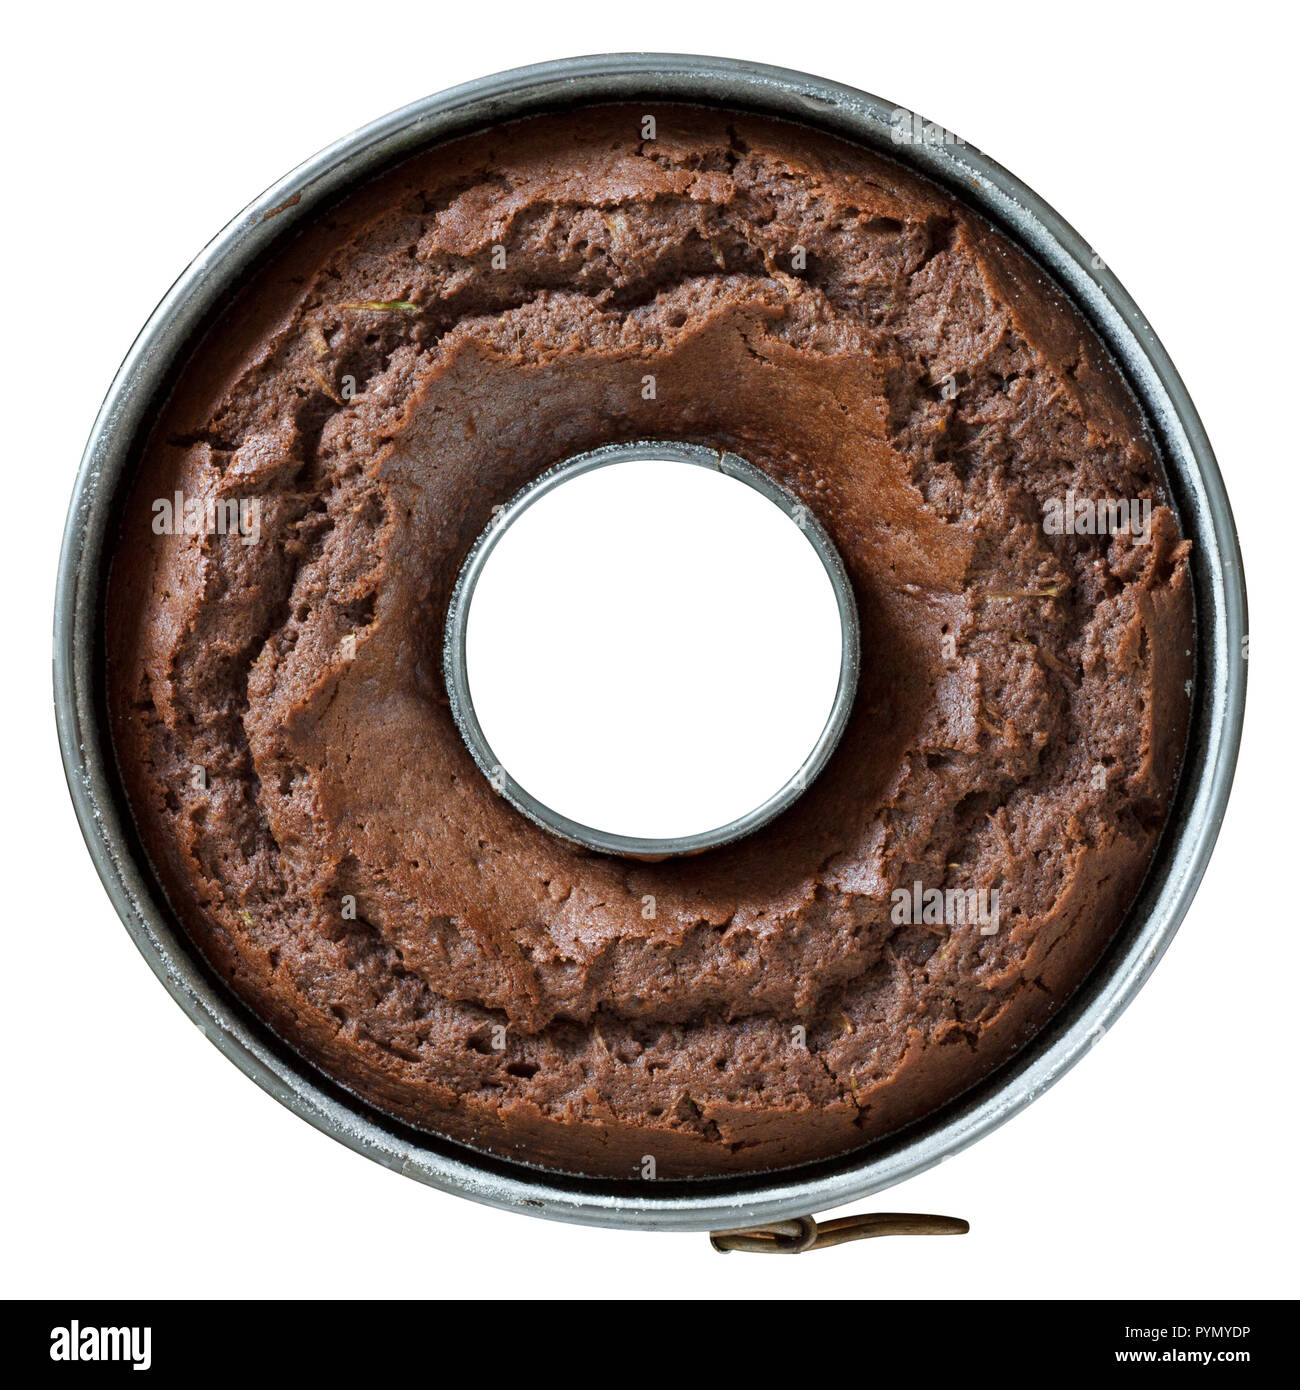 Adjustable round metal baking ring with chocolate sponge cake. Stock Photo